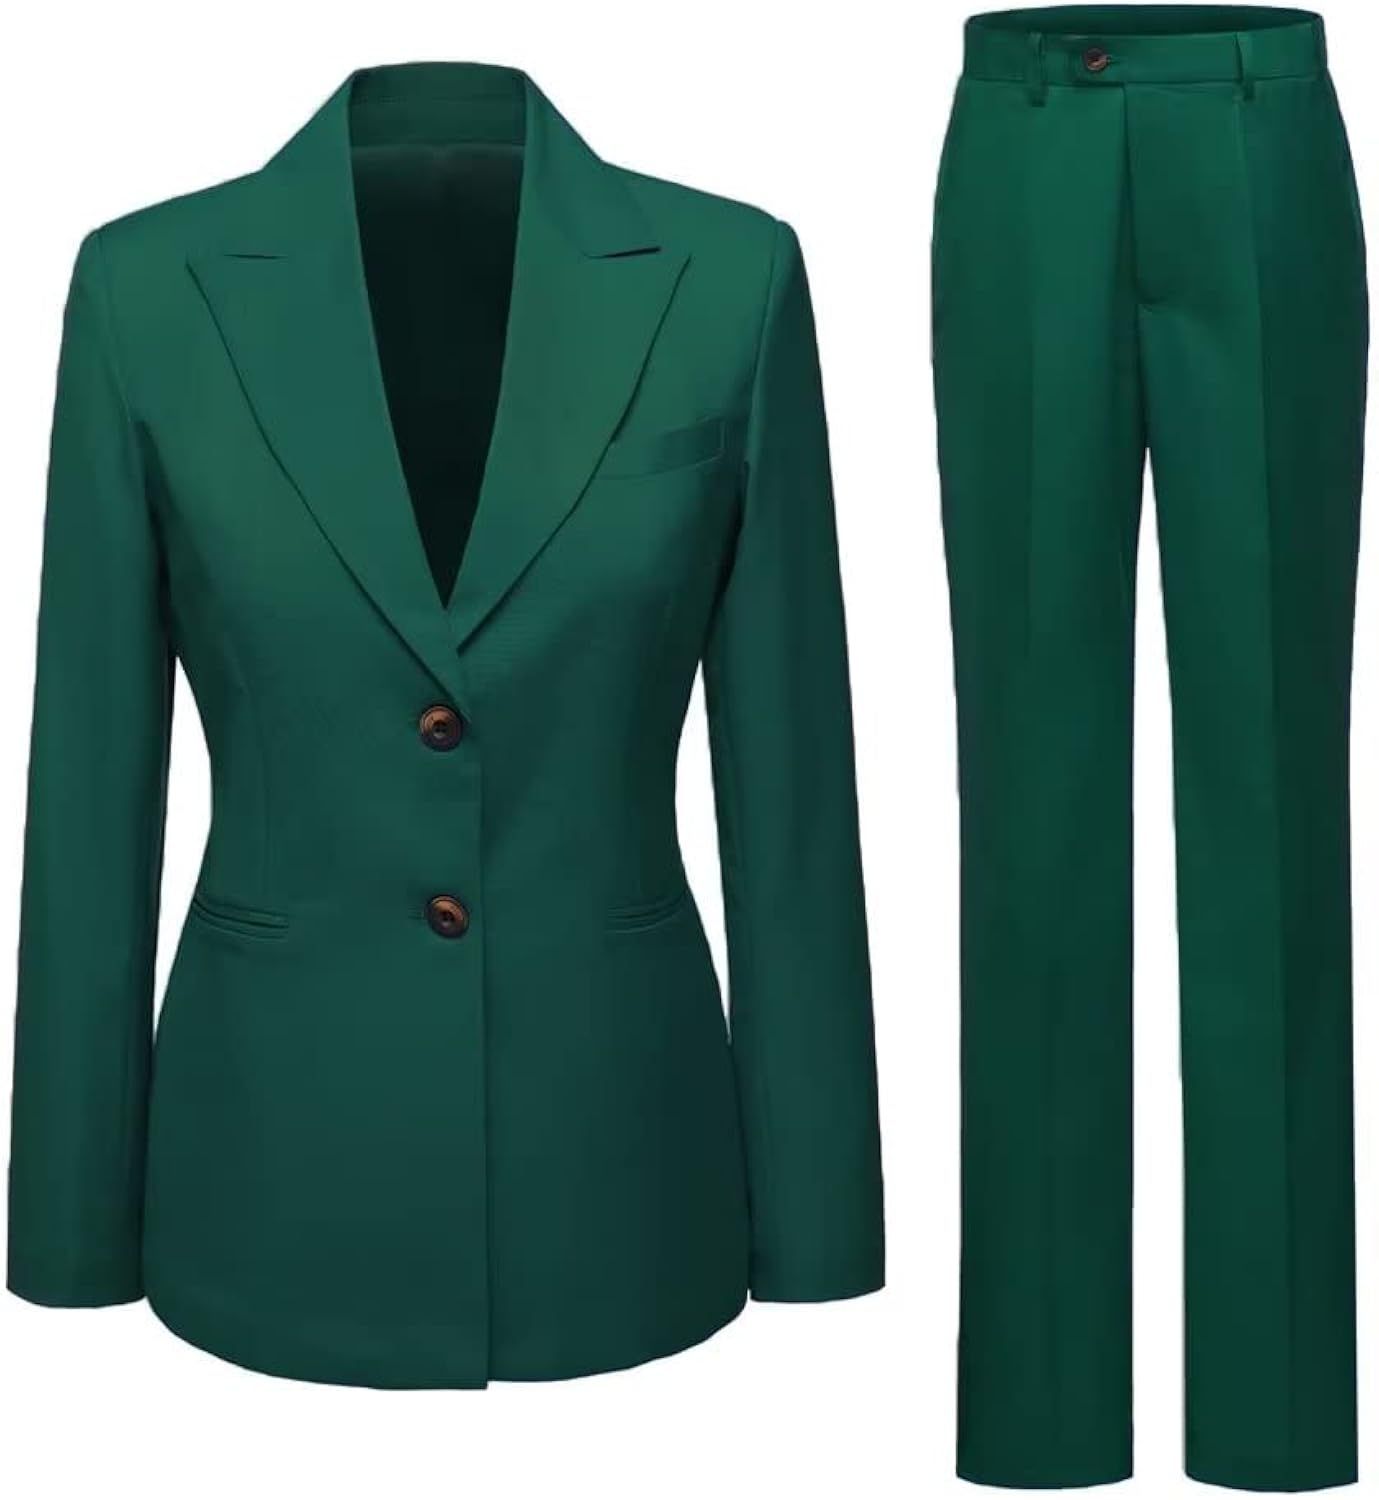 Women's Suits 2 Piece Office Casual Long Sleeved Work Suit Set Business Professional Attire Women One Button Blazer+Pants | Amazon (US)